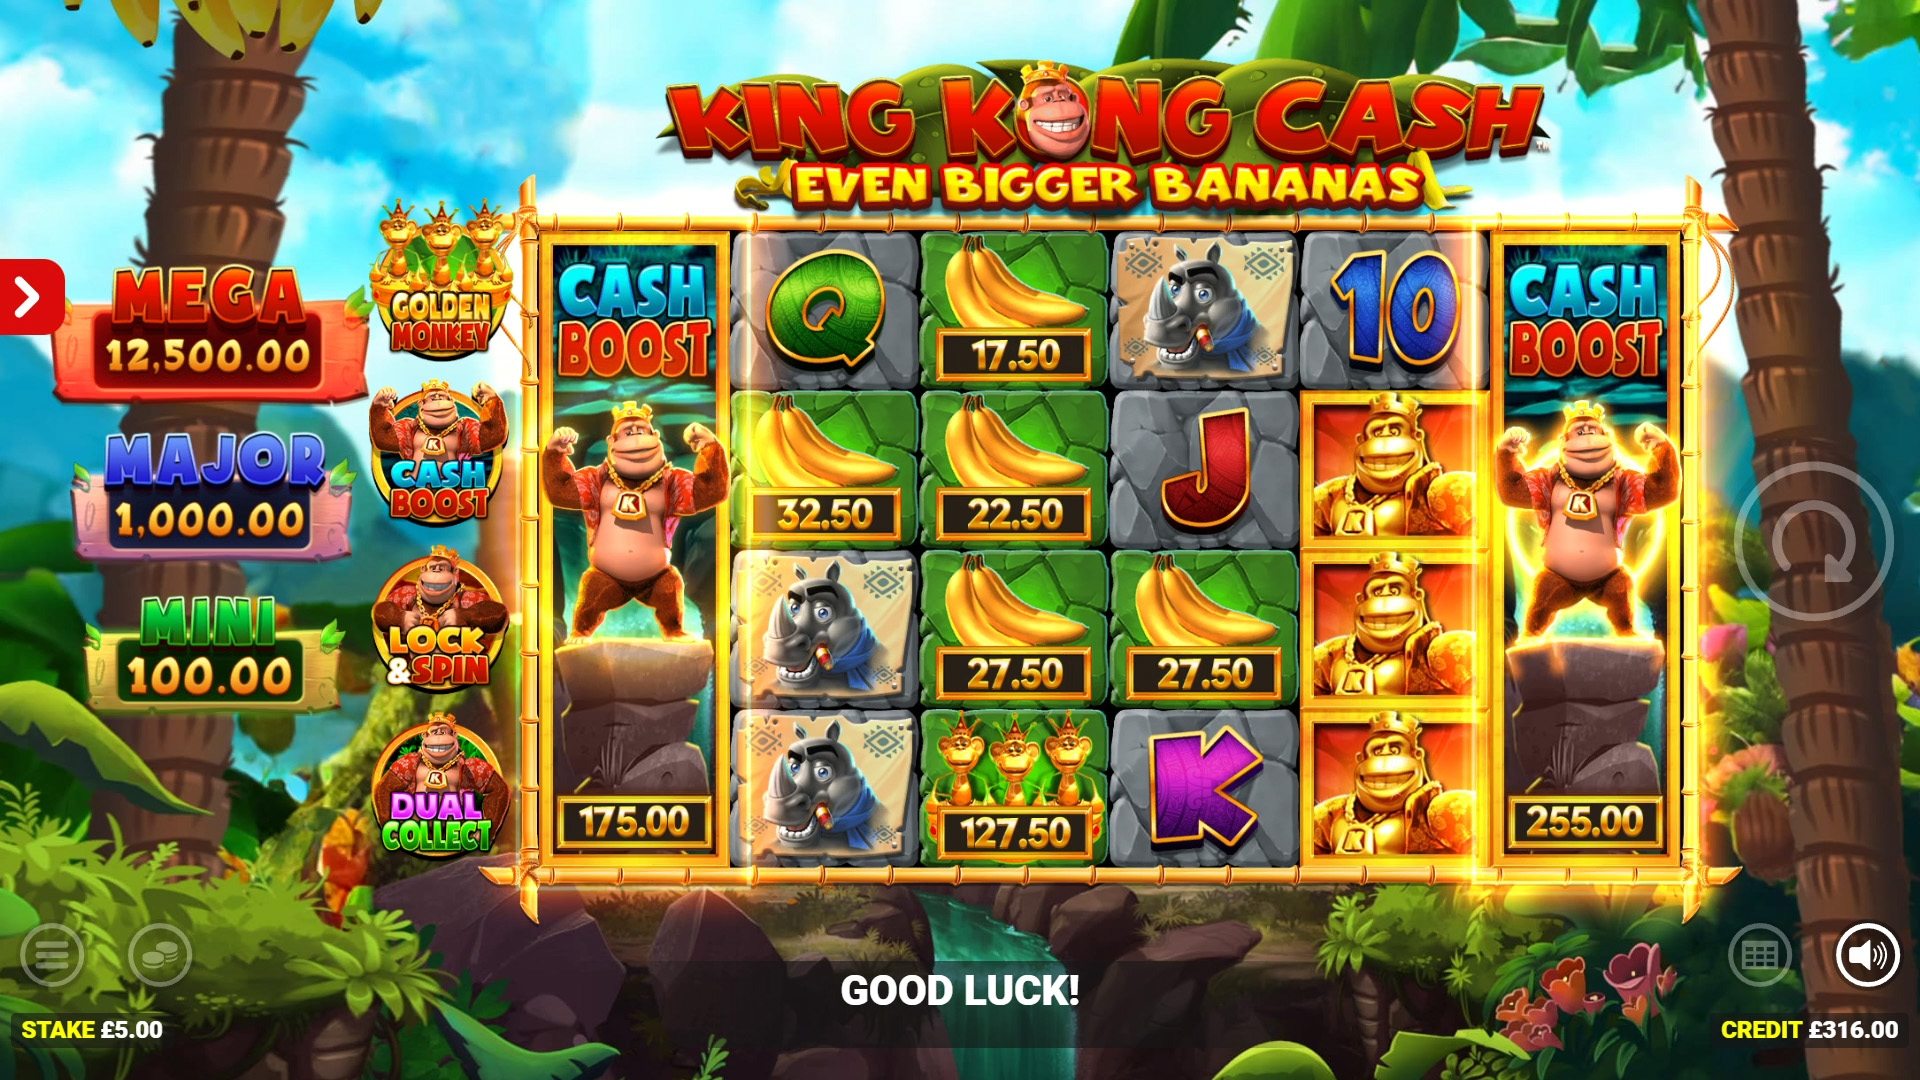 King Kong Cash Even Bigger Bananas Slot Base Game Doubled